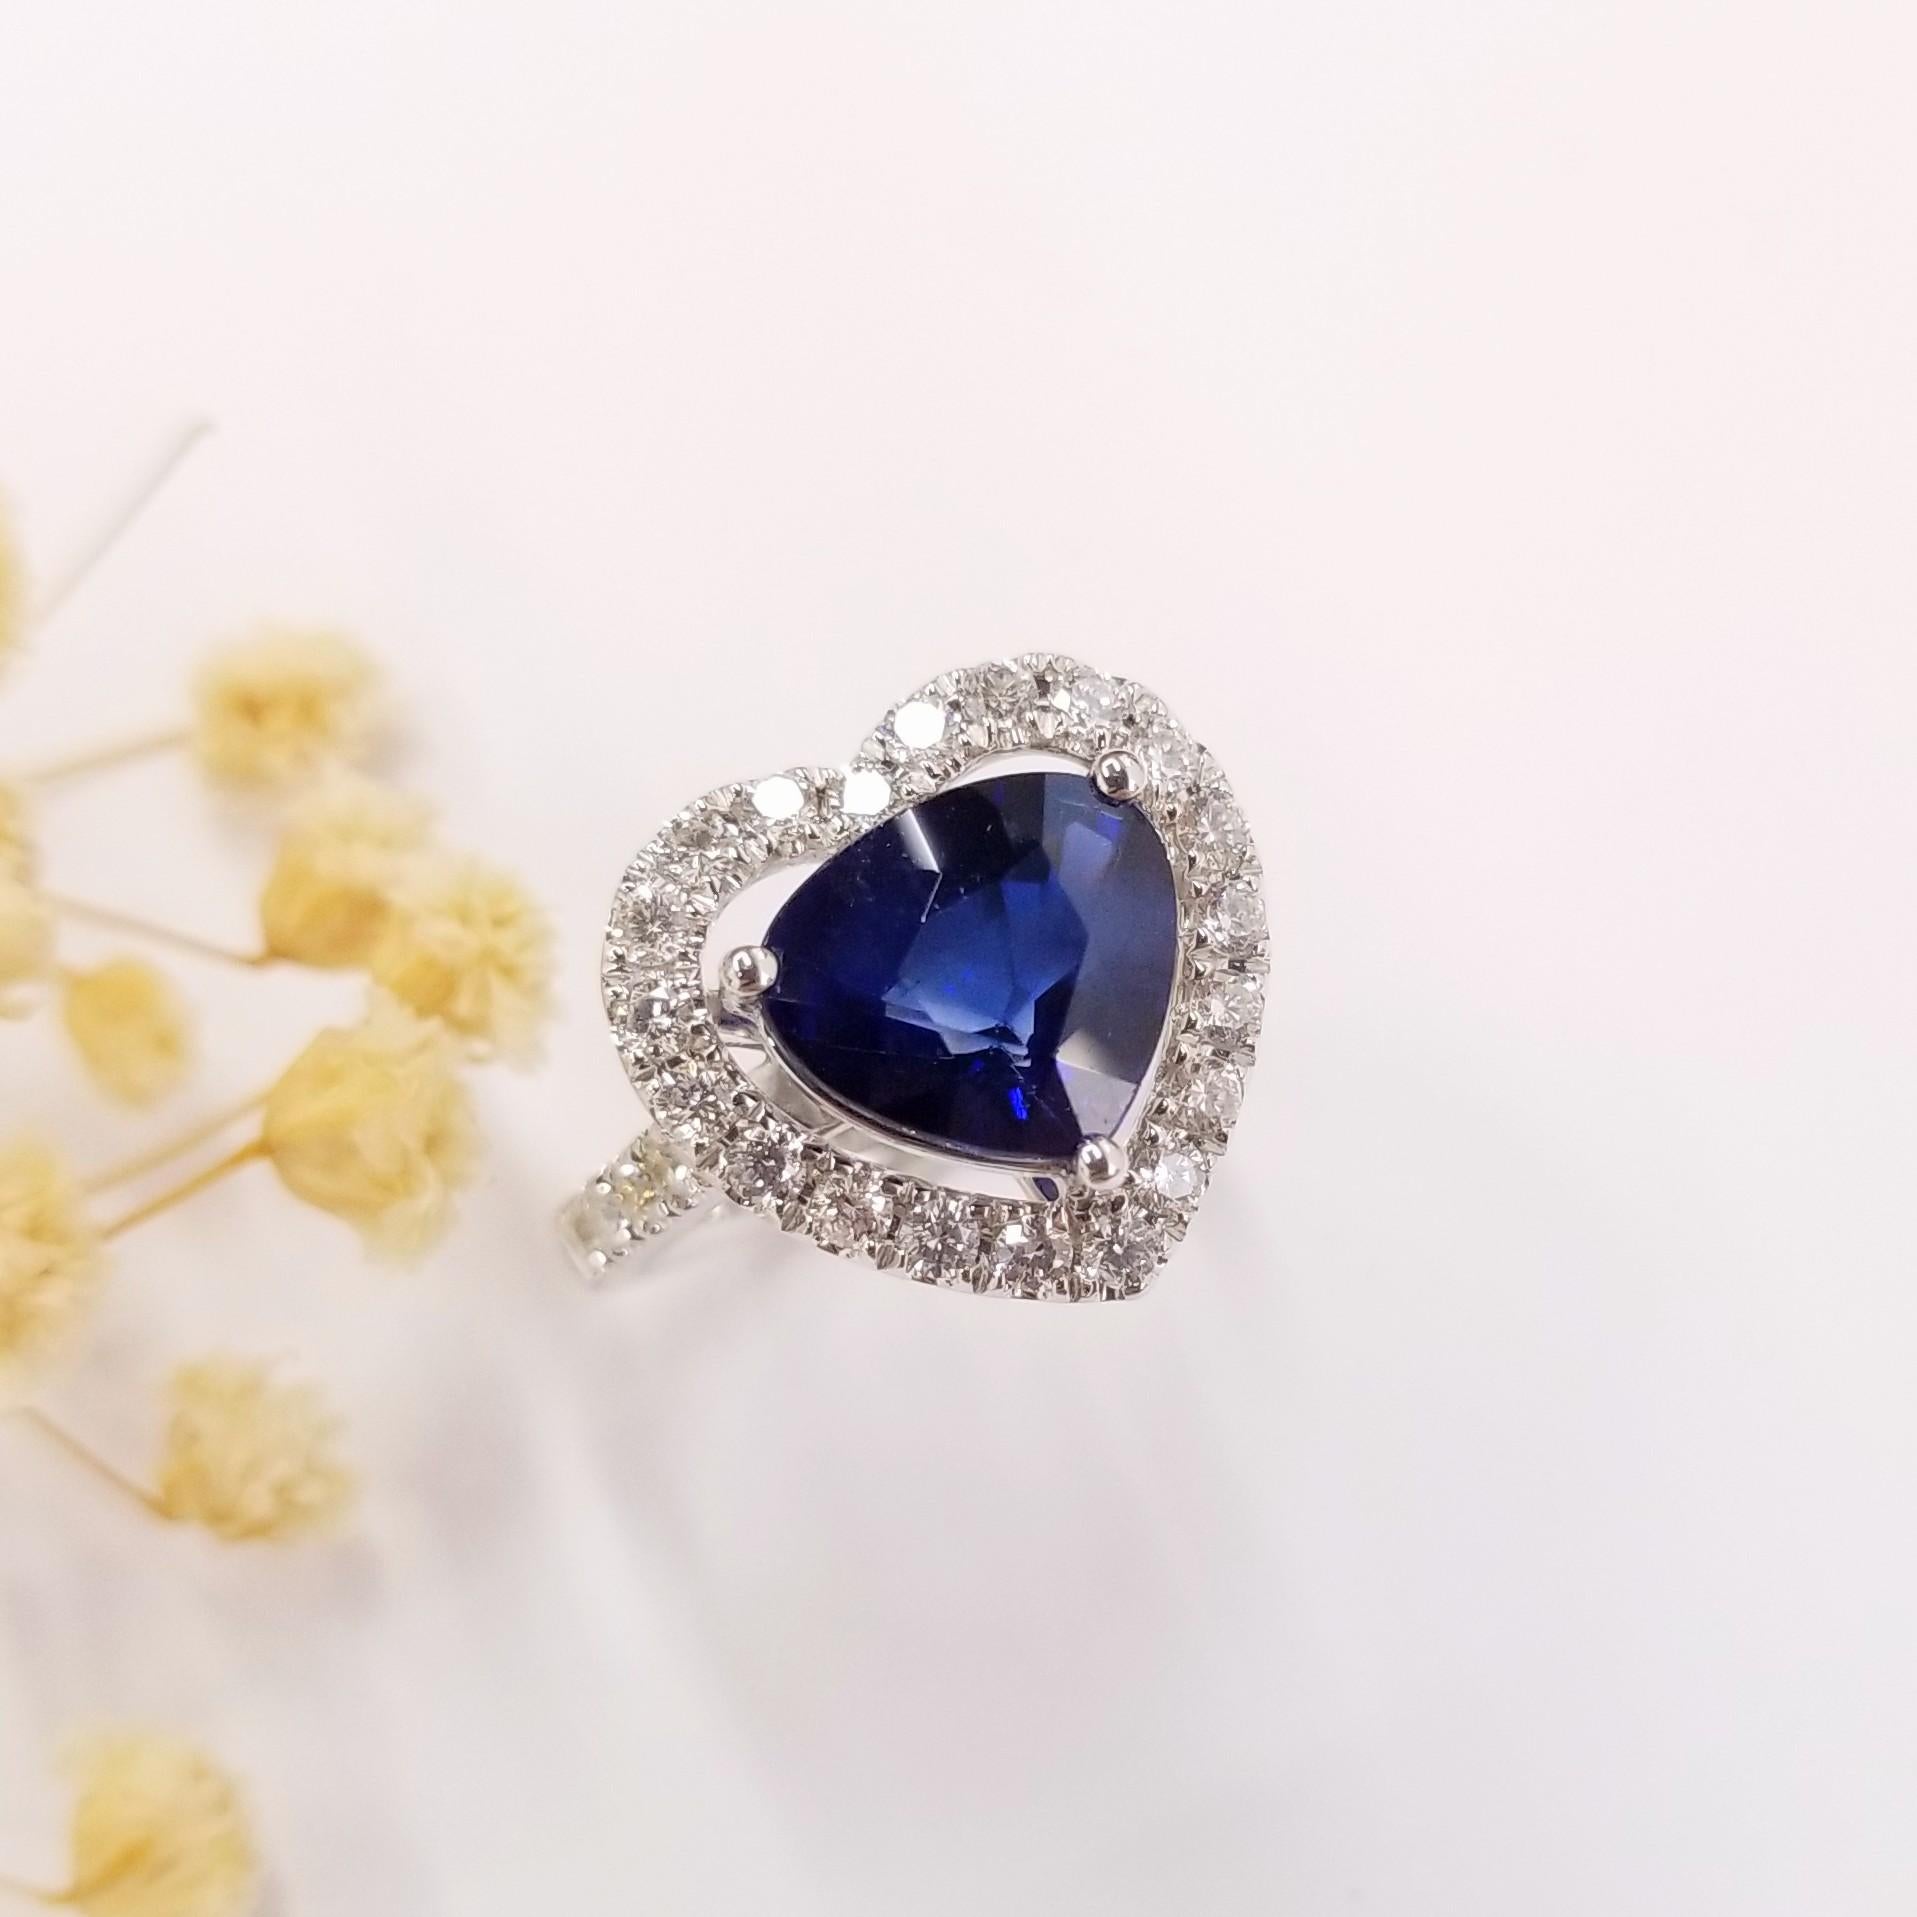 Modern IGI Certified 3.15Carat Blue Sapphire & Diamond Ring in 18K White Gold For Sale